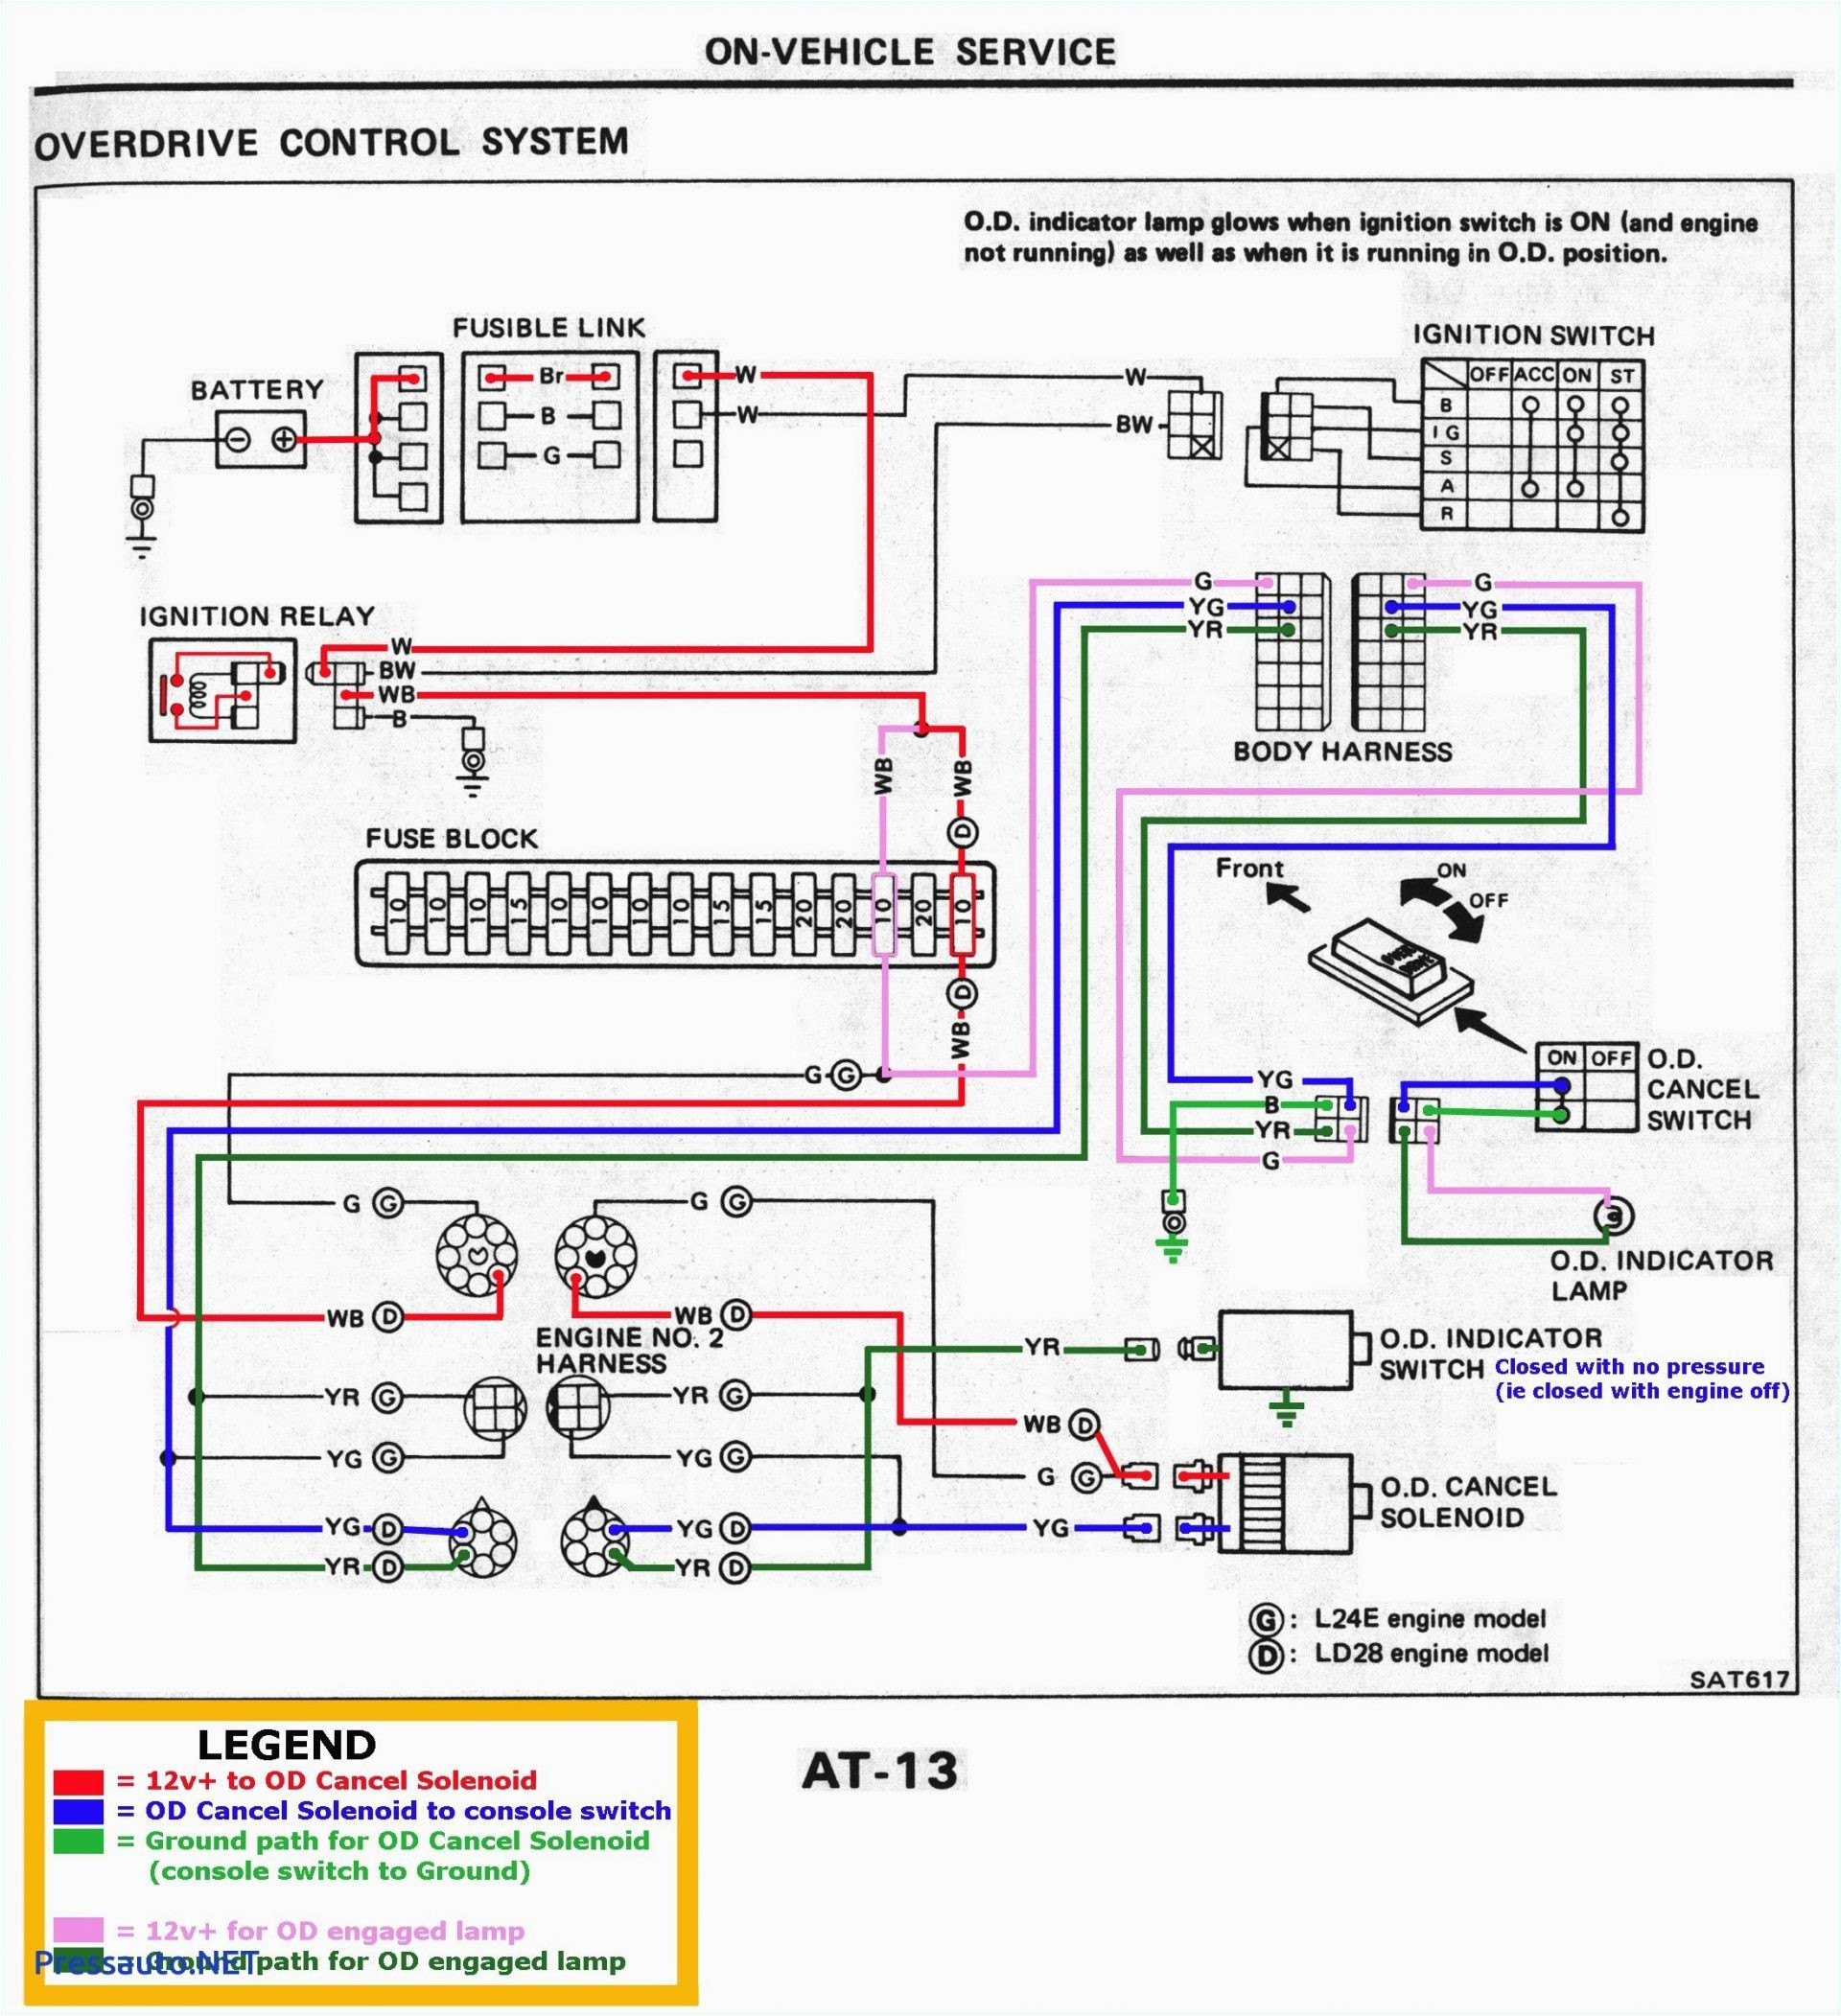 ppc wiring diagram wiring diagram postppc wiring diagram wiring diagram center a optilux wiring diagram wire